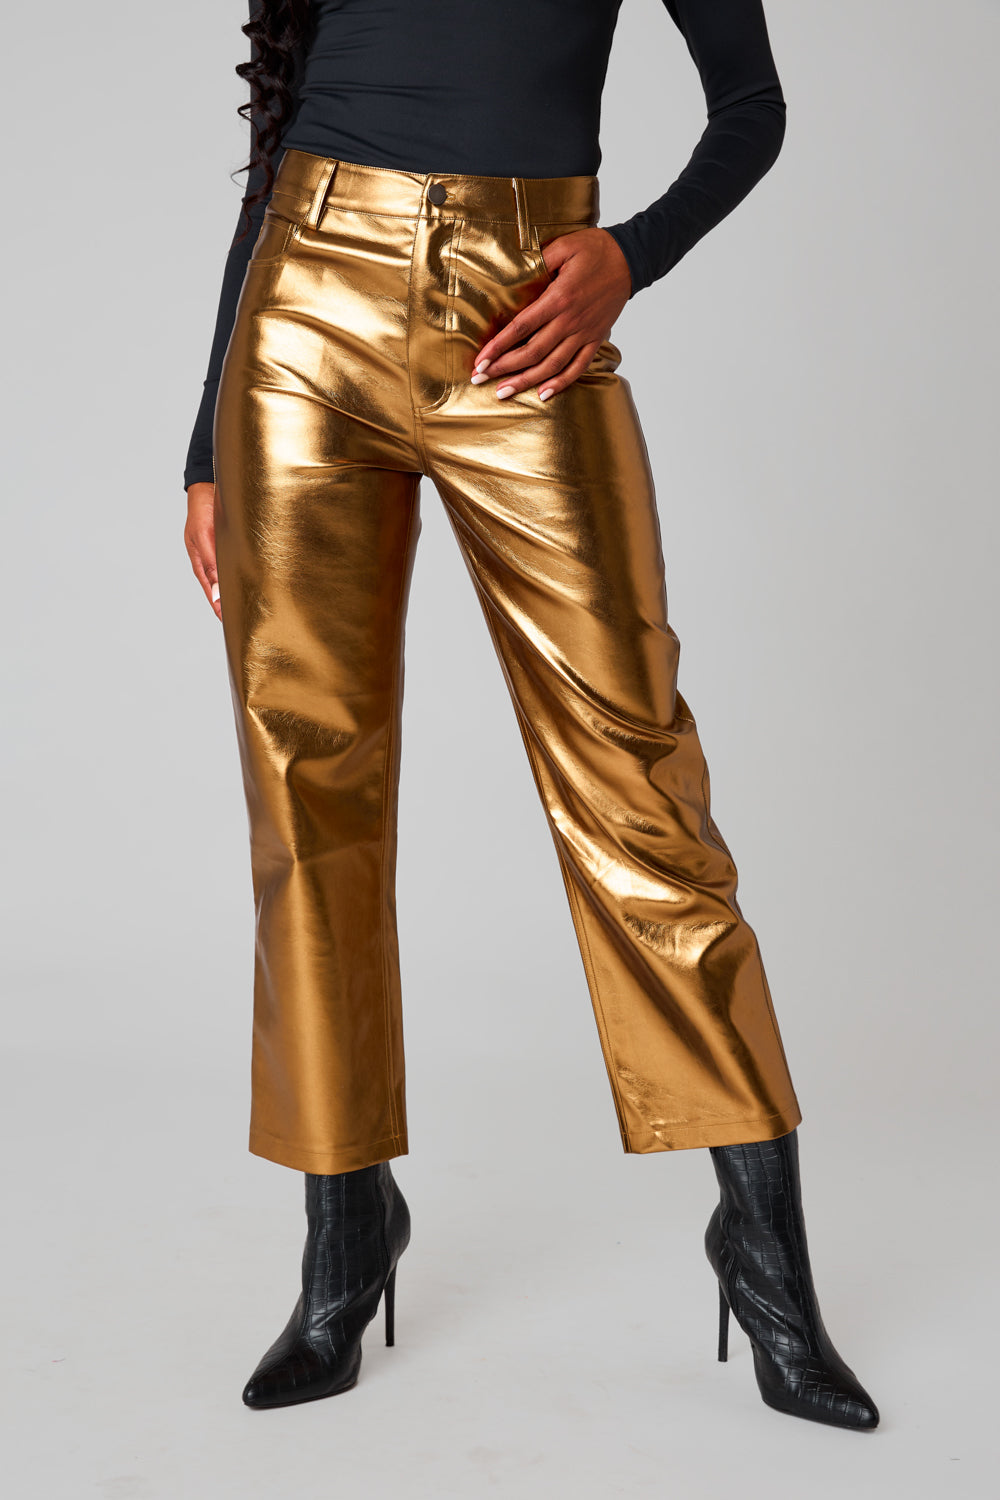 BuddyLove, Travolta High-Rise Metallic Pants